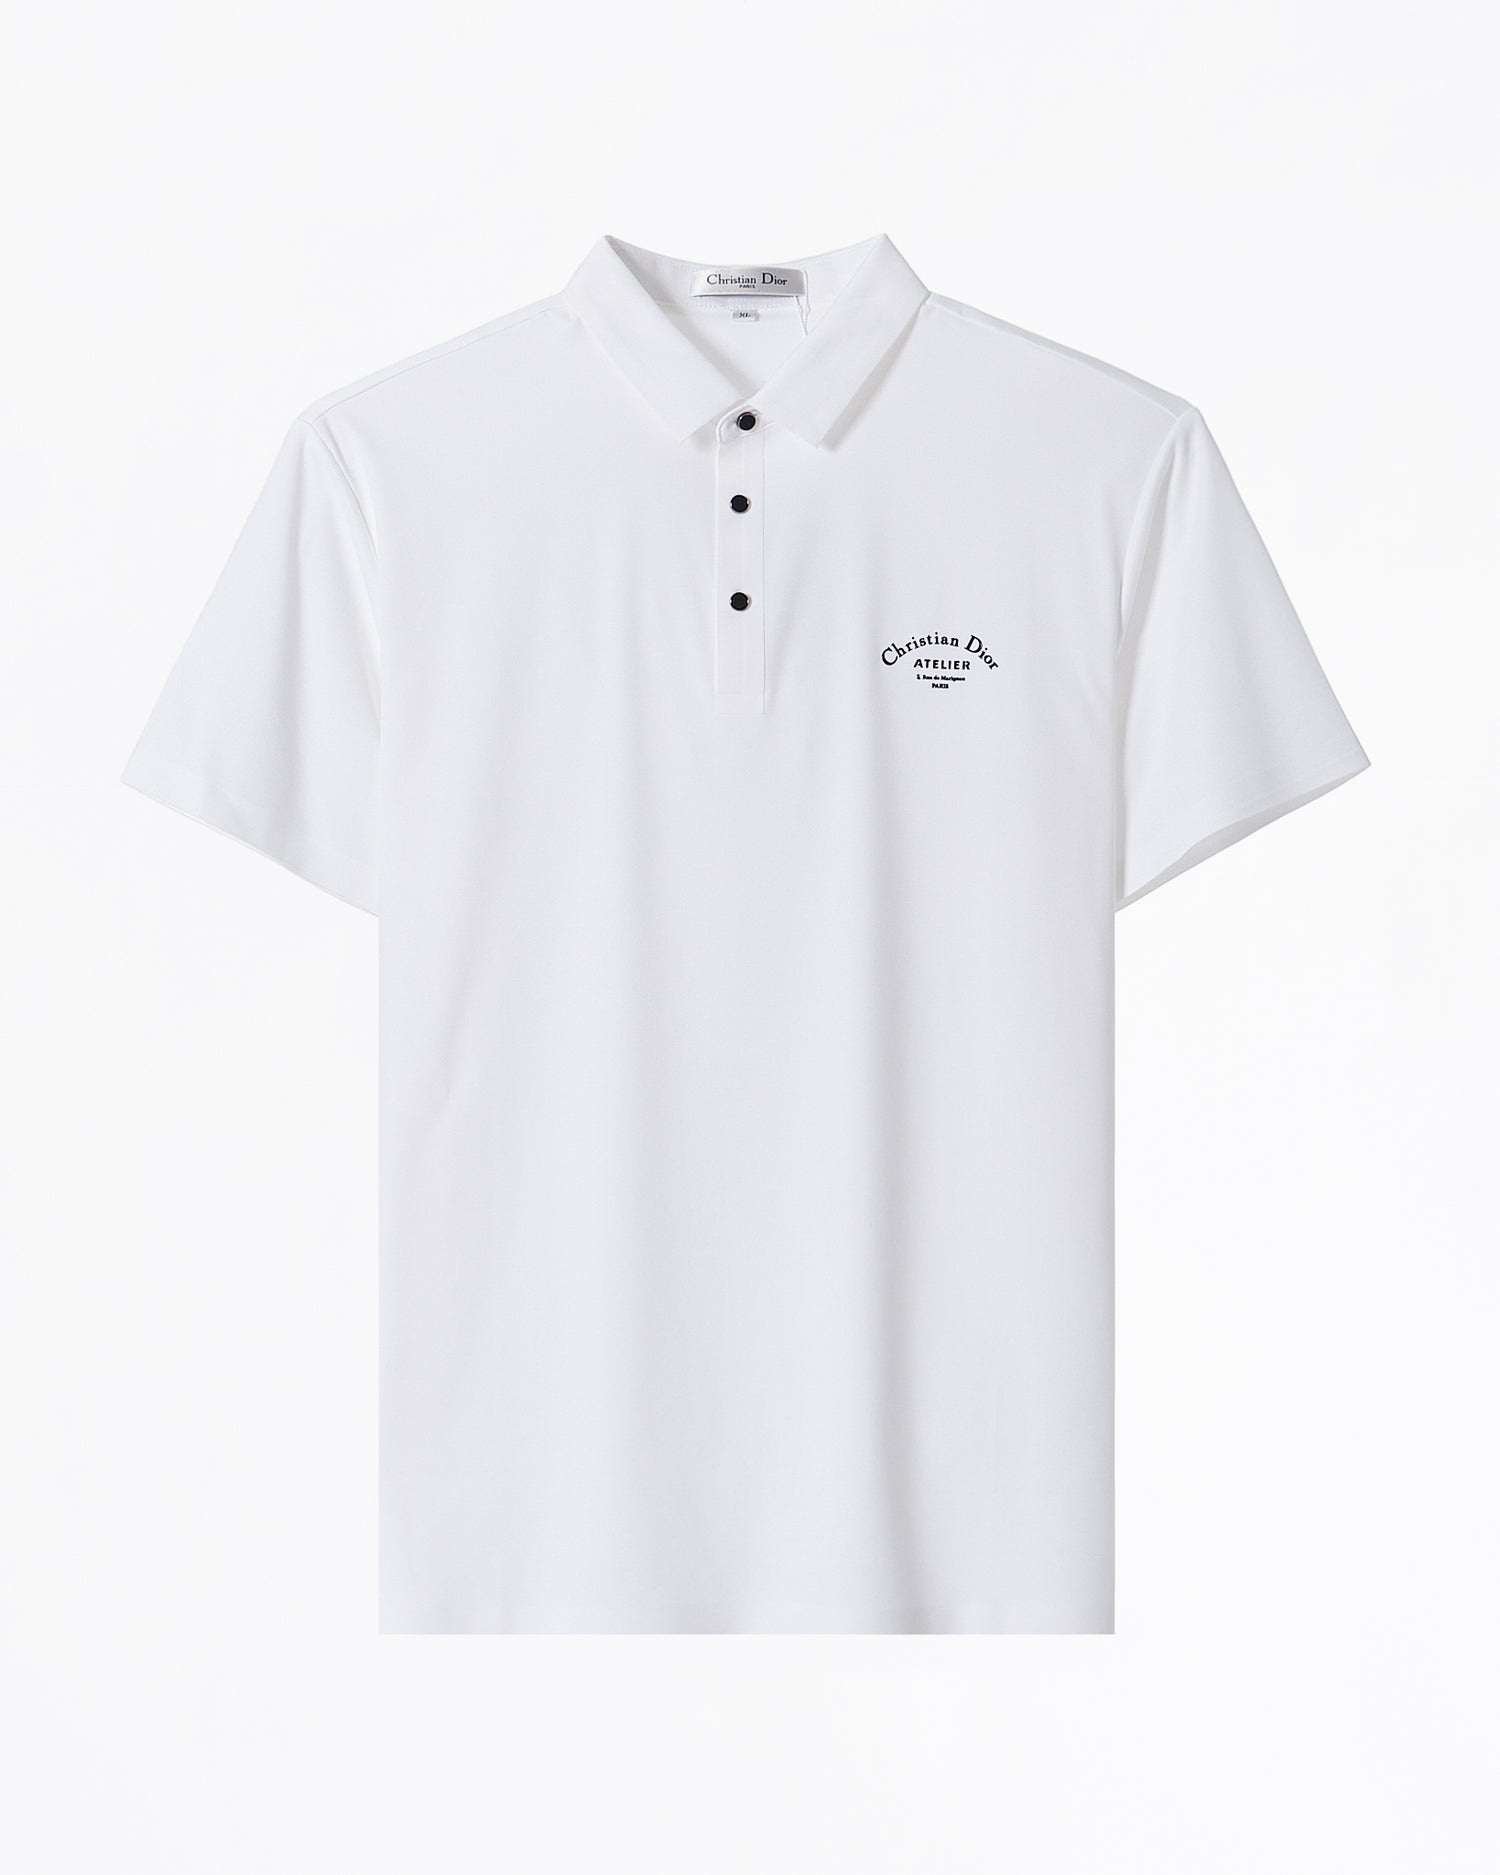 CD Logo Printed Men White Polo Shirt 57.90